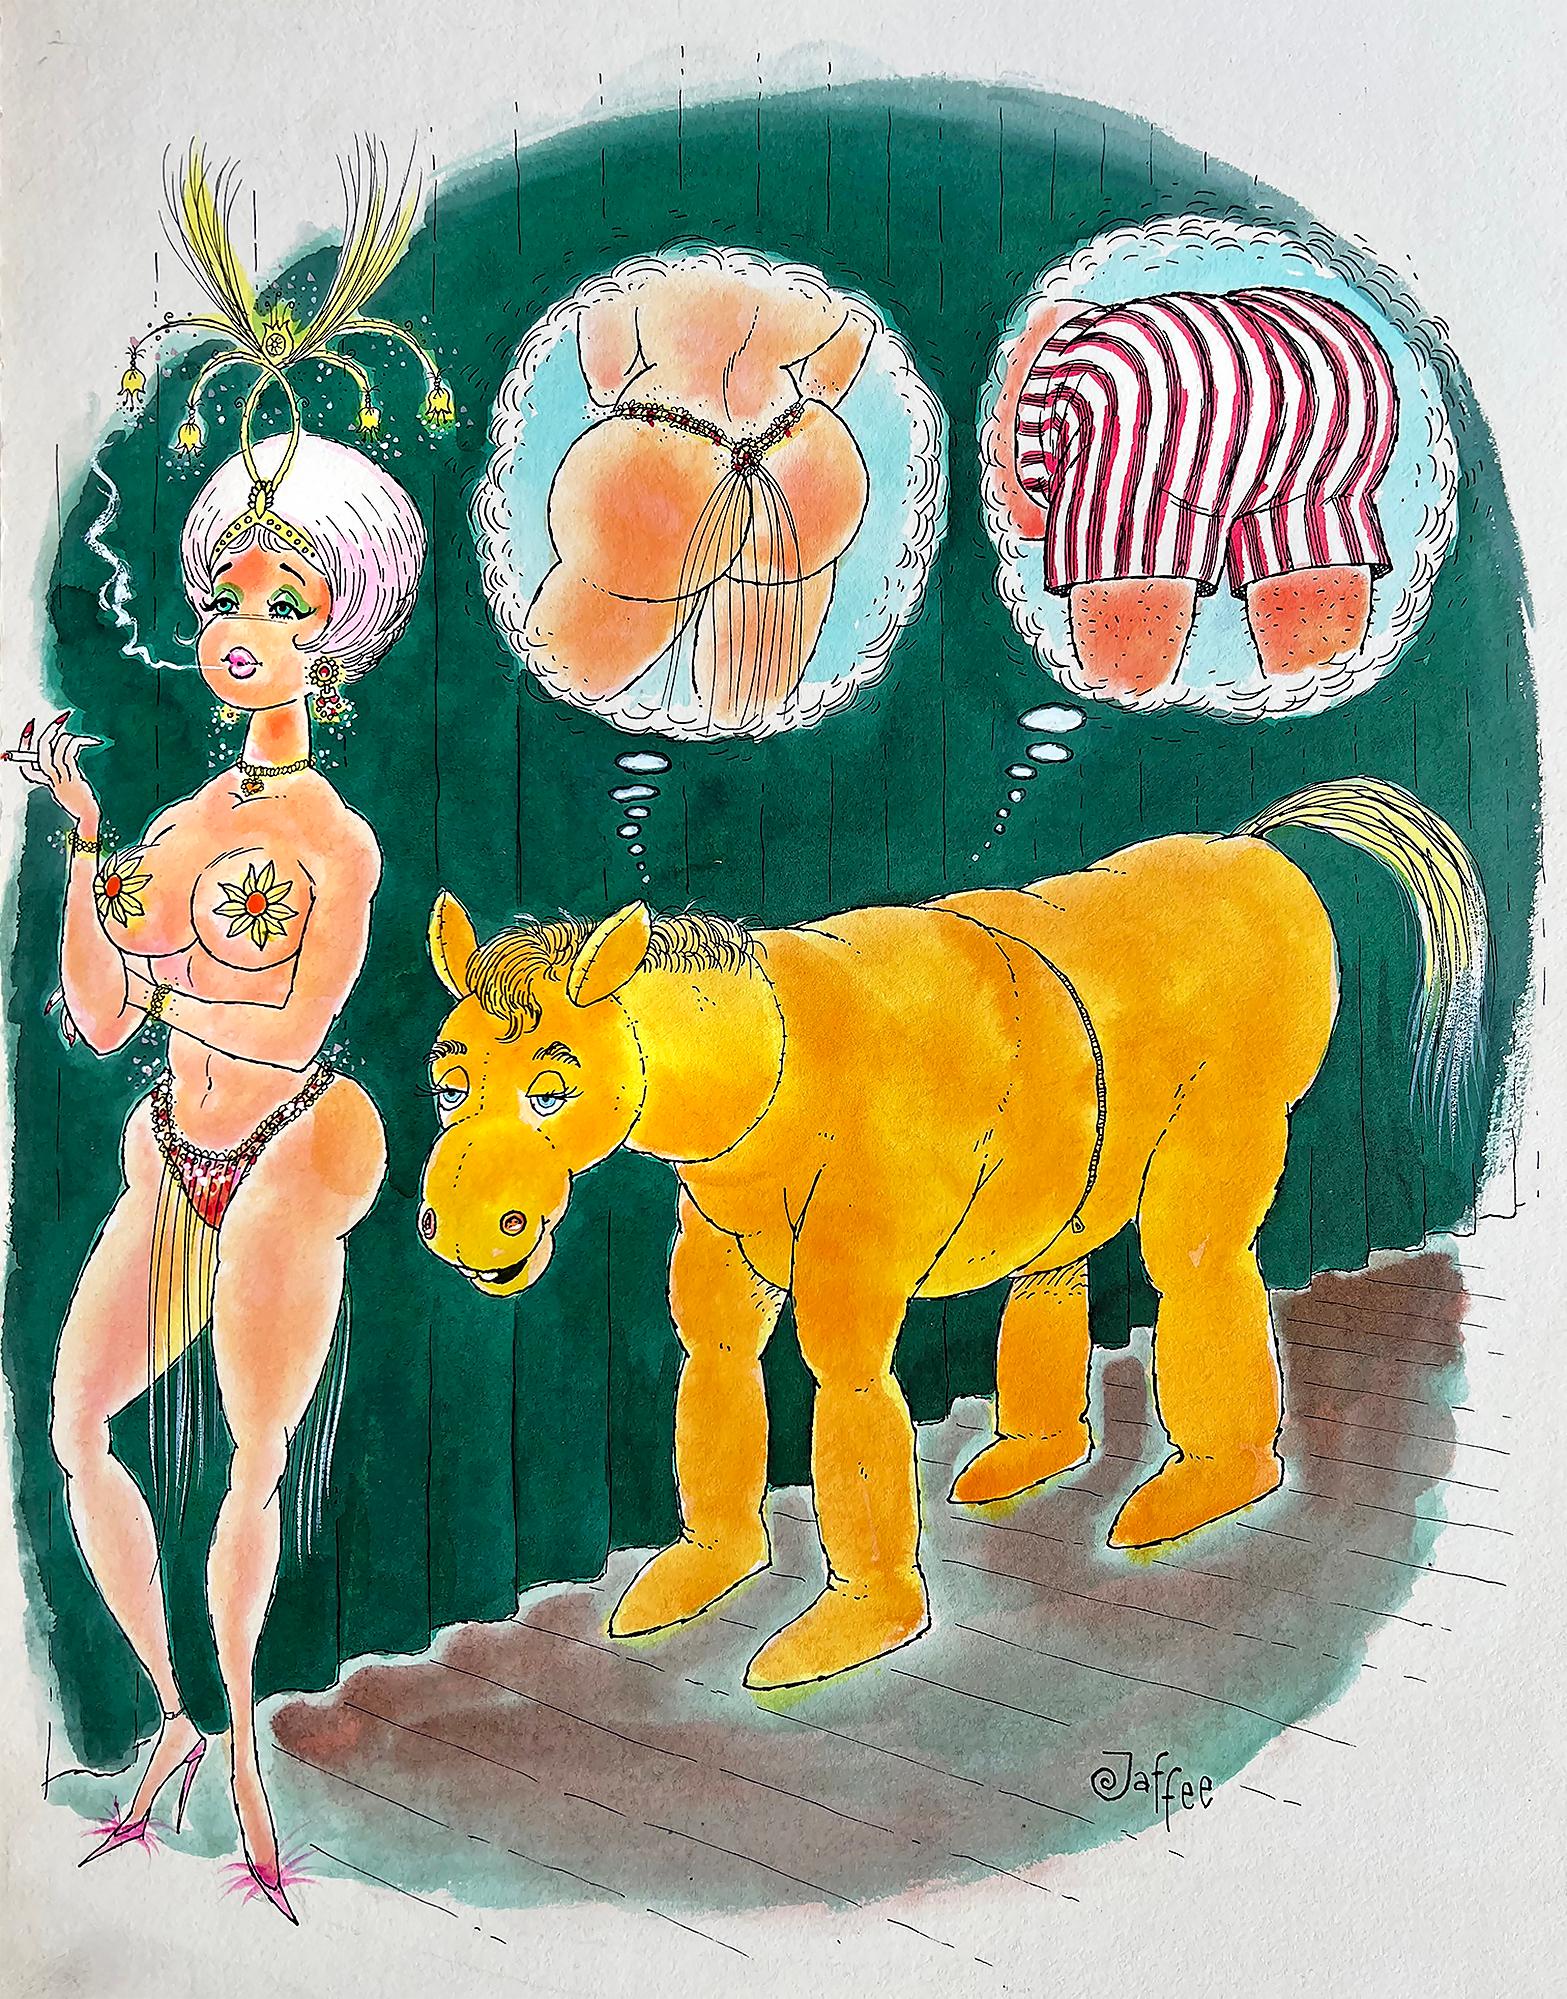 Al Jaffee Animal Art – Sexy Akt Show Girl Buttocks Pondered by Show Horse - Sexy Cartoon Mad Magazine